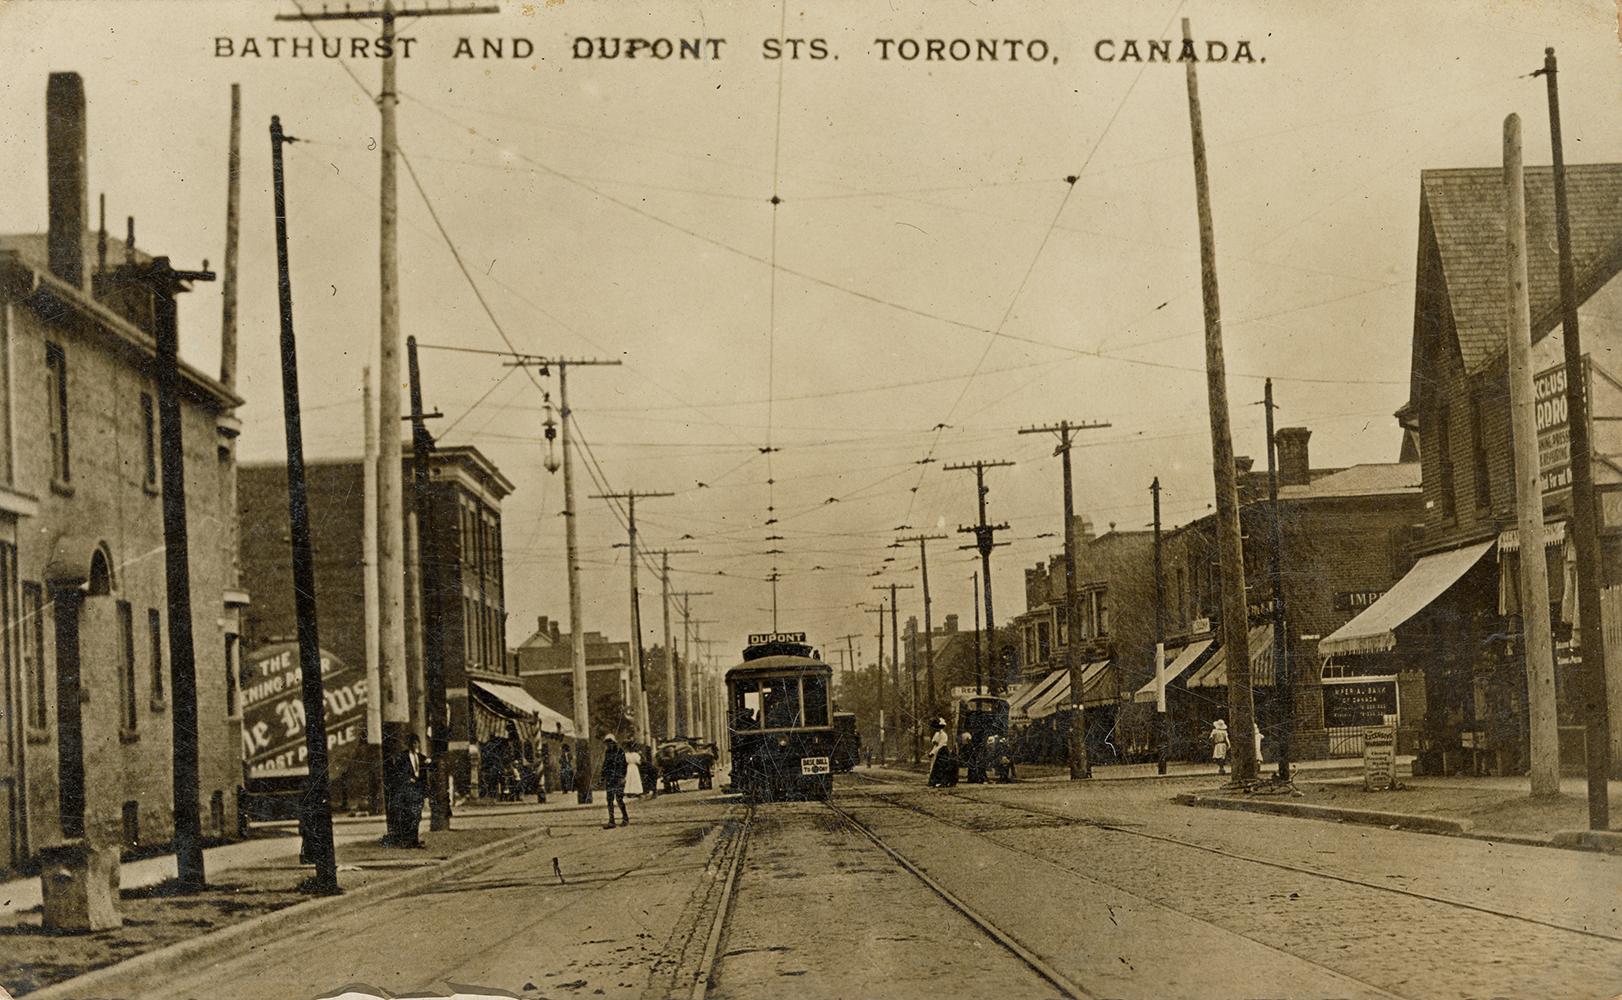 Bathurst and Dupont Sts., Toronto, Canada